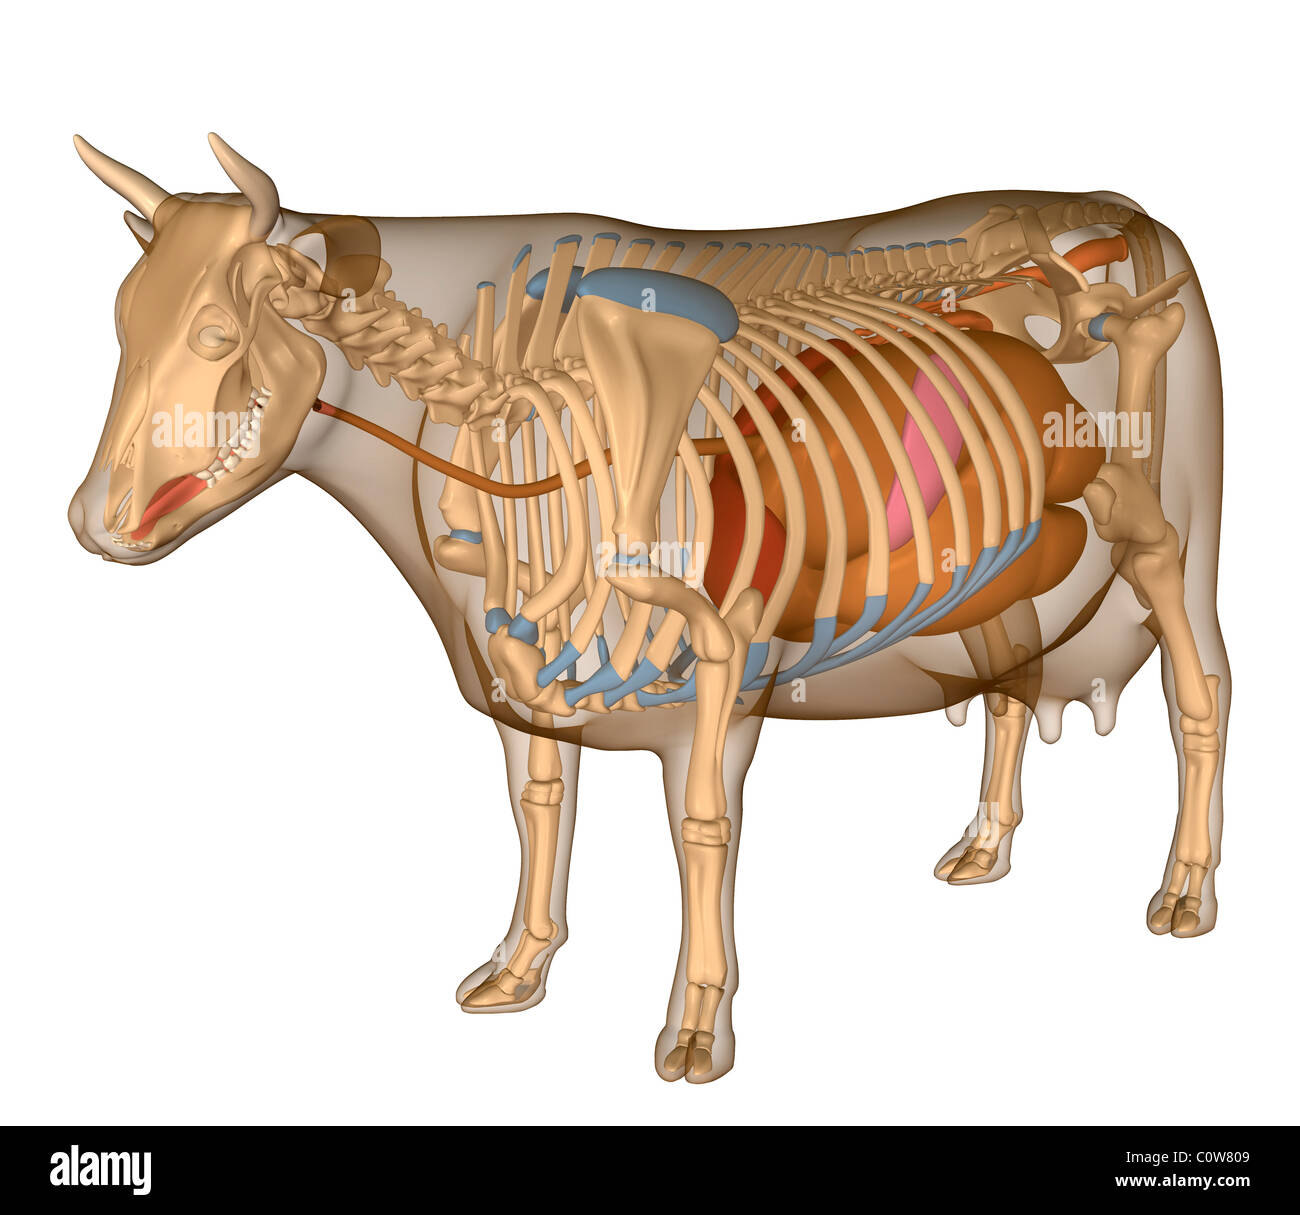 Anatomy of the cow digestion digestive Stock Photo - Alamy